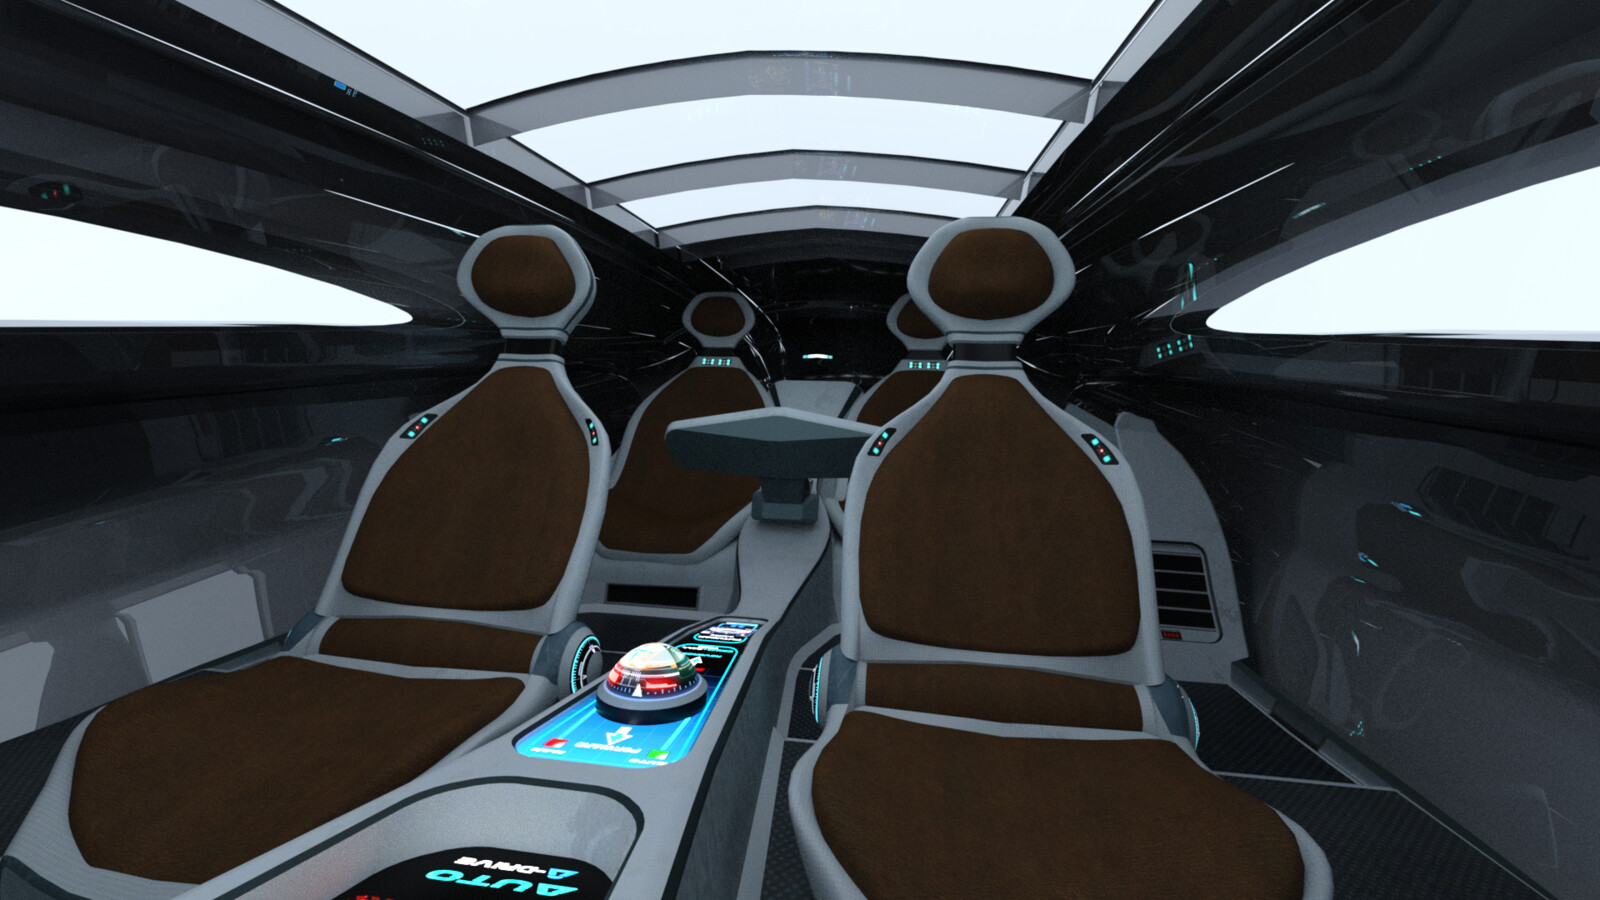 The Phantom Luxury Gravcar interior.